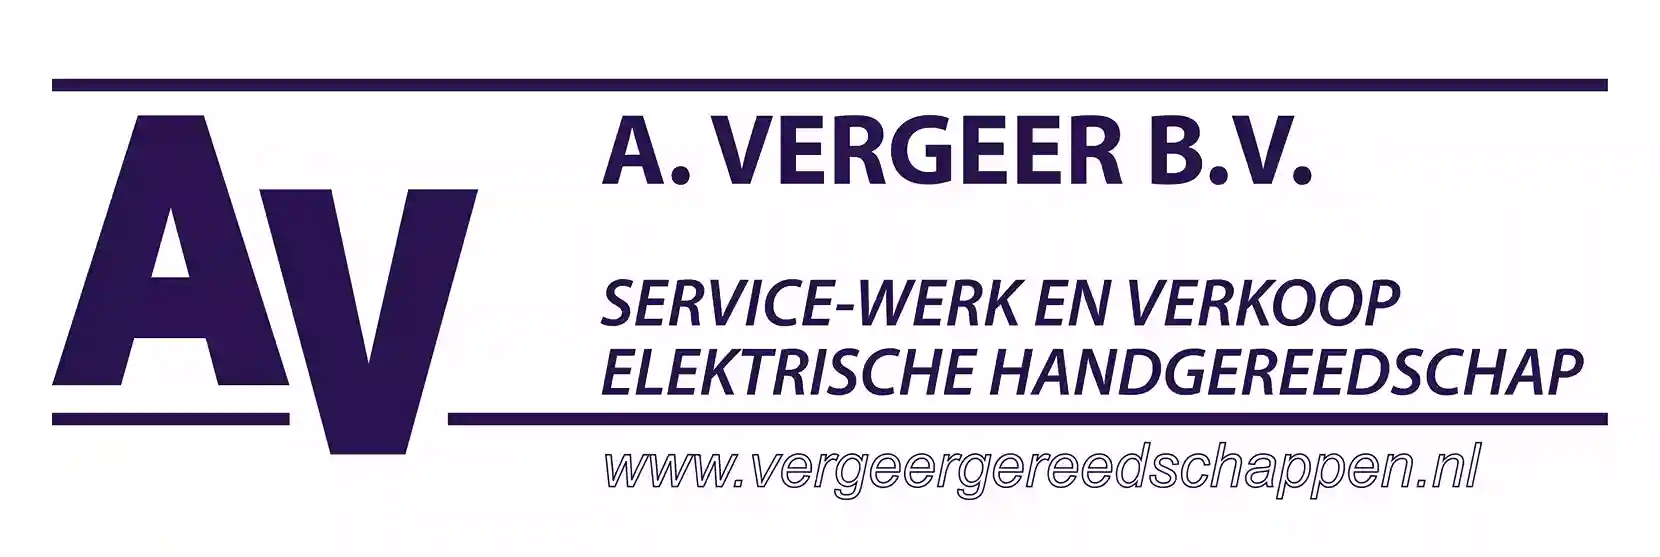 freecompress-Vergeer-150x50